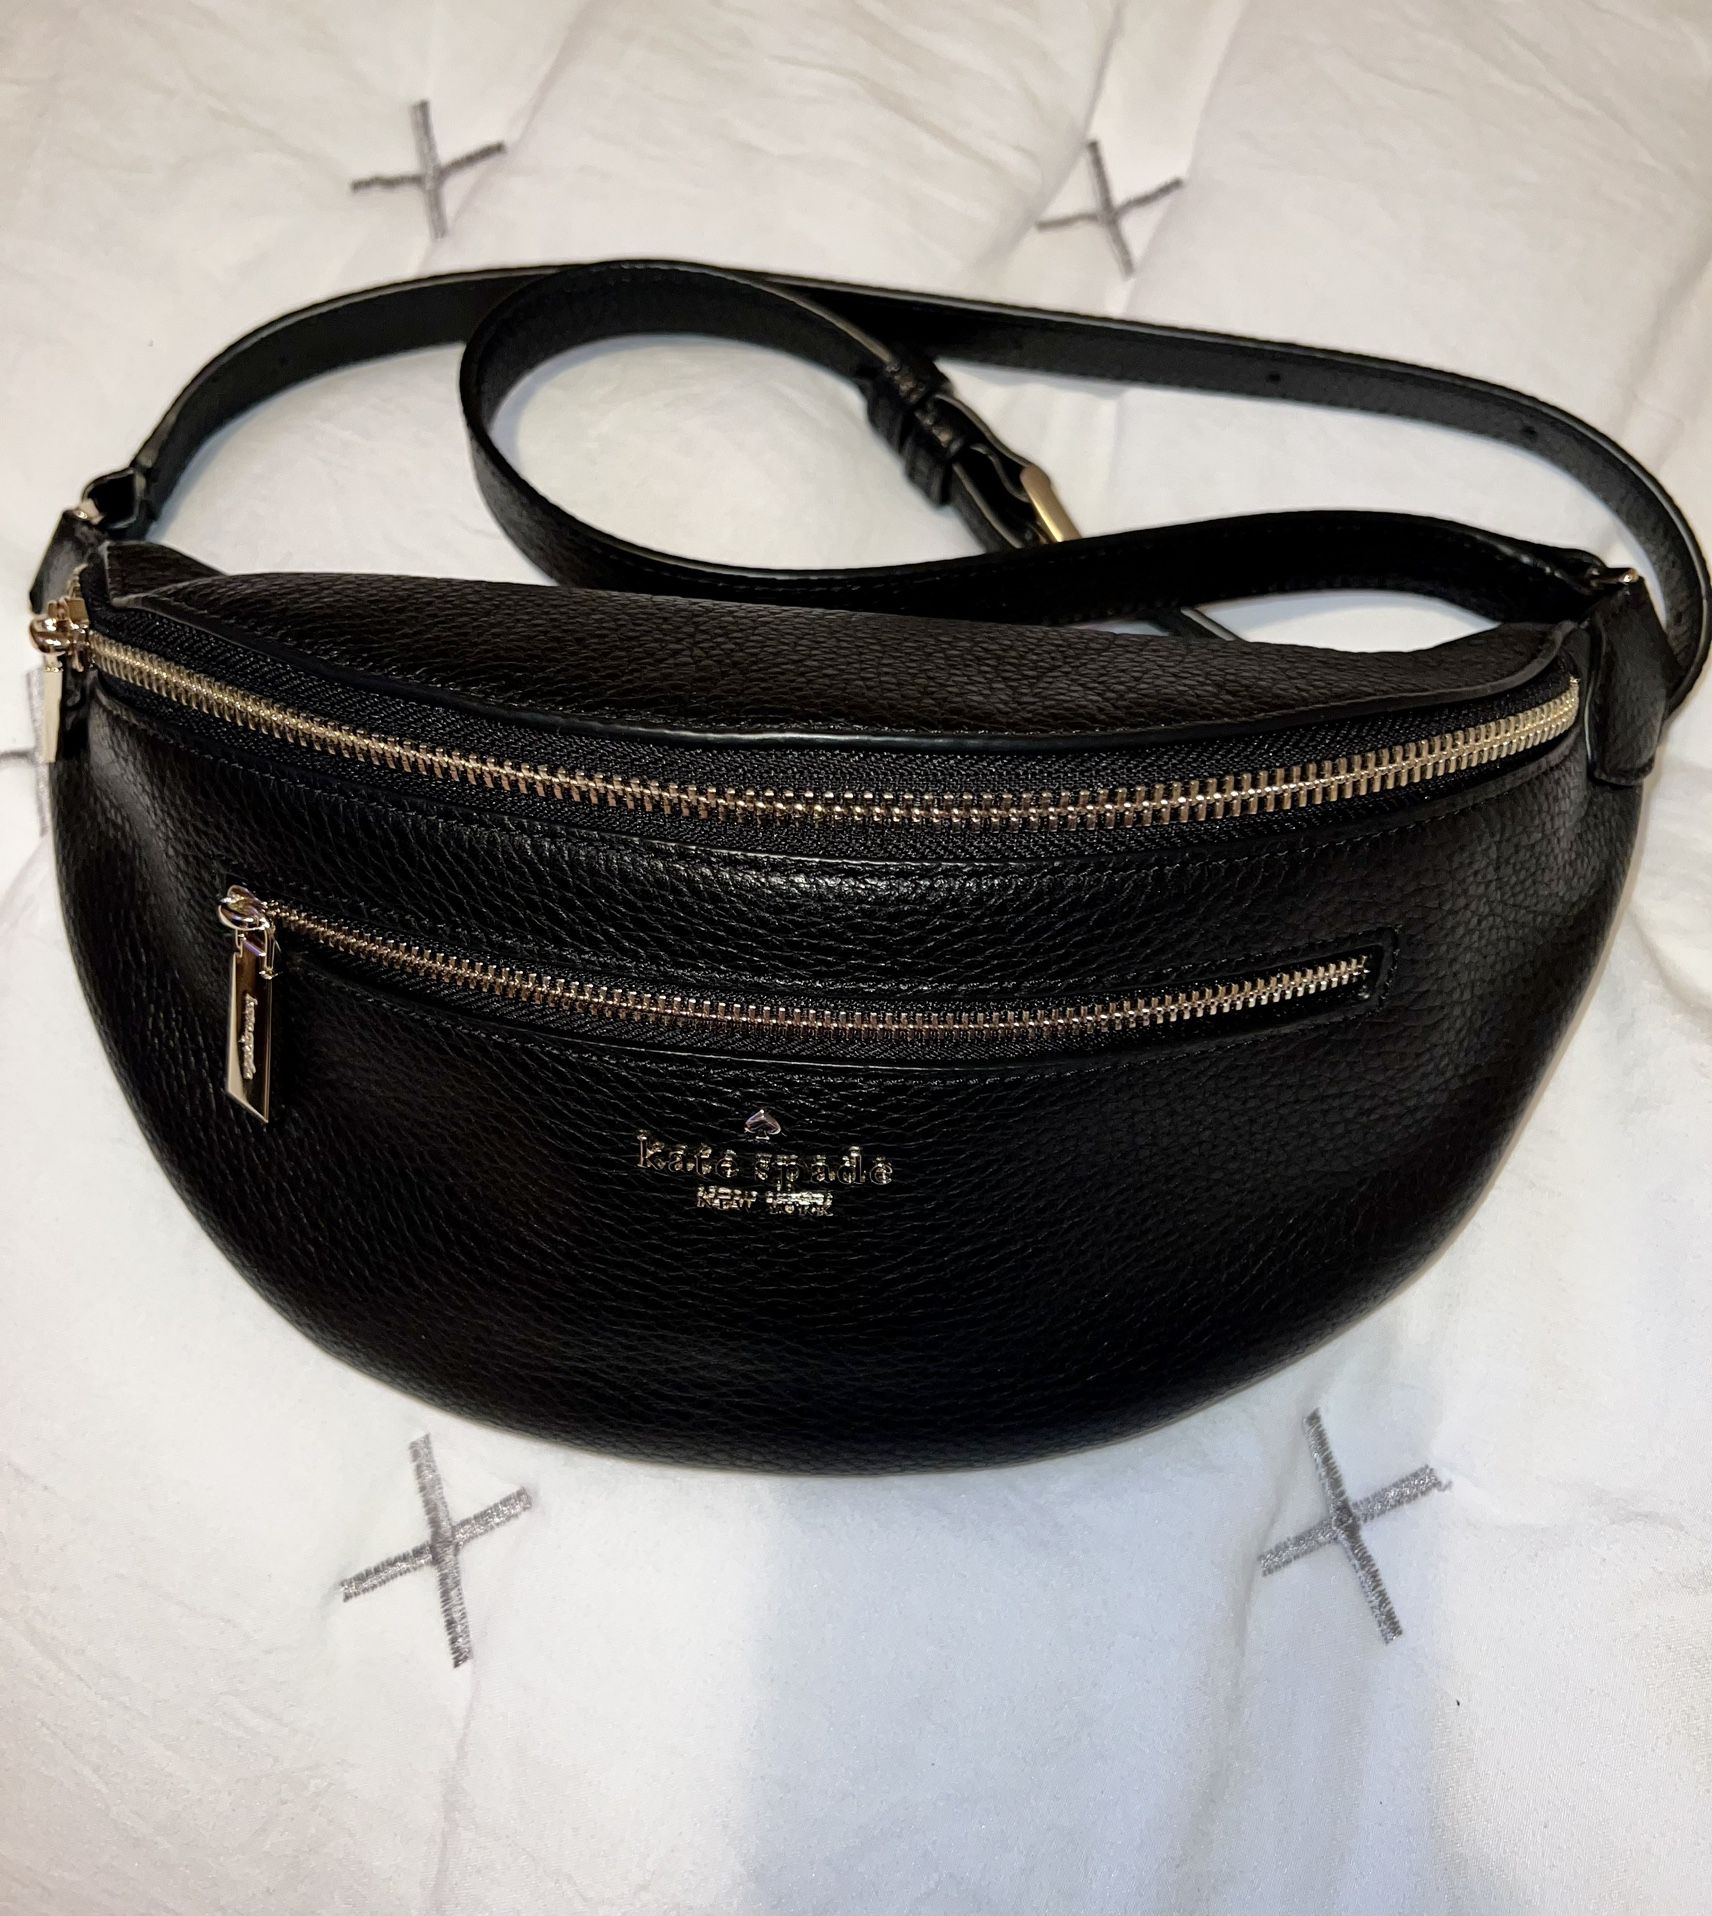 Kate Spade Belt Bag for Sale in Bell Gardens, CA - OfferUp